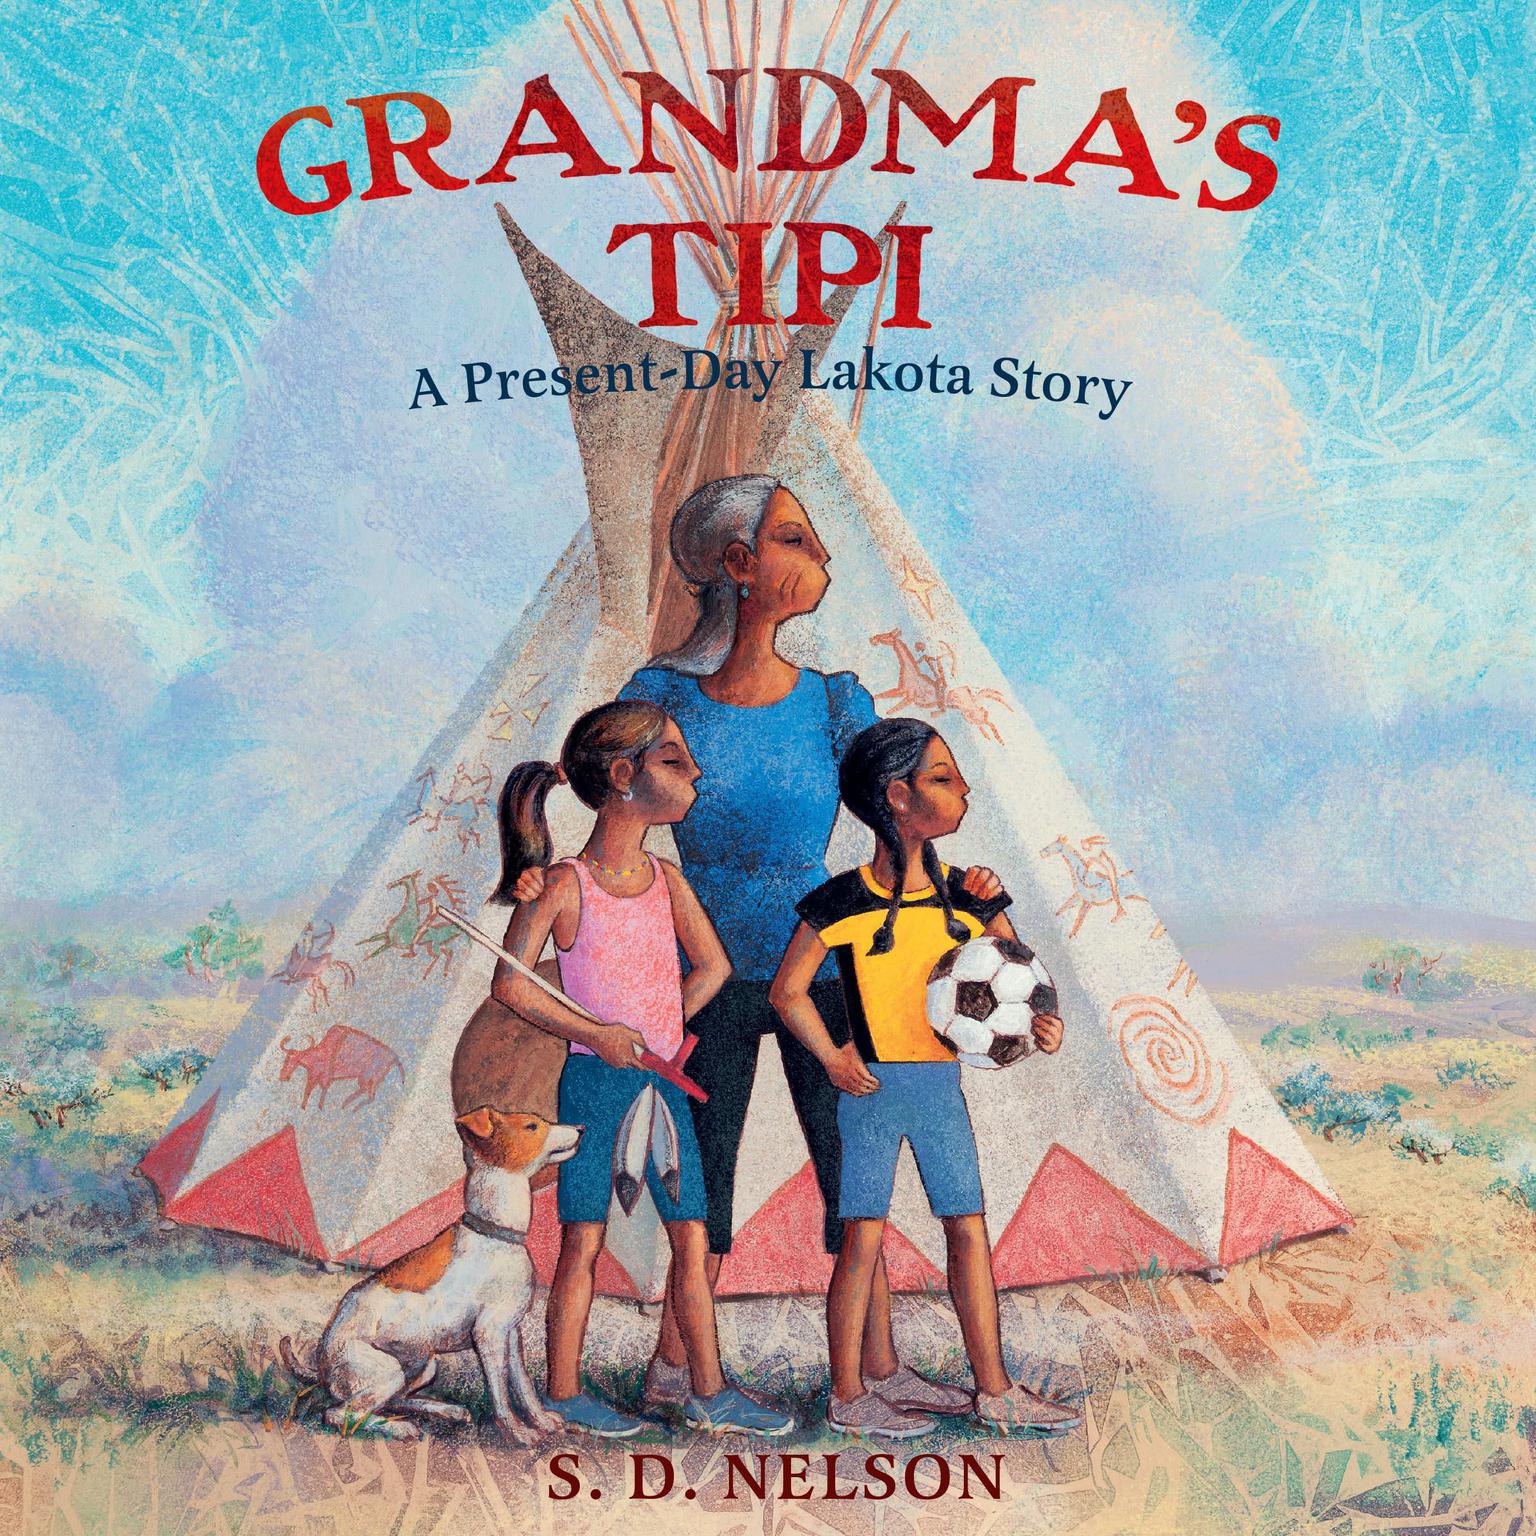 Grandmas Tipi: A Present-Day Lakota Story Audiobook, by S. D. Nelson